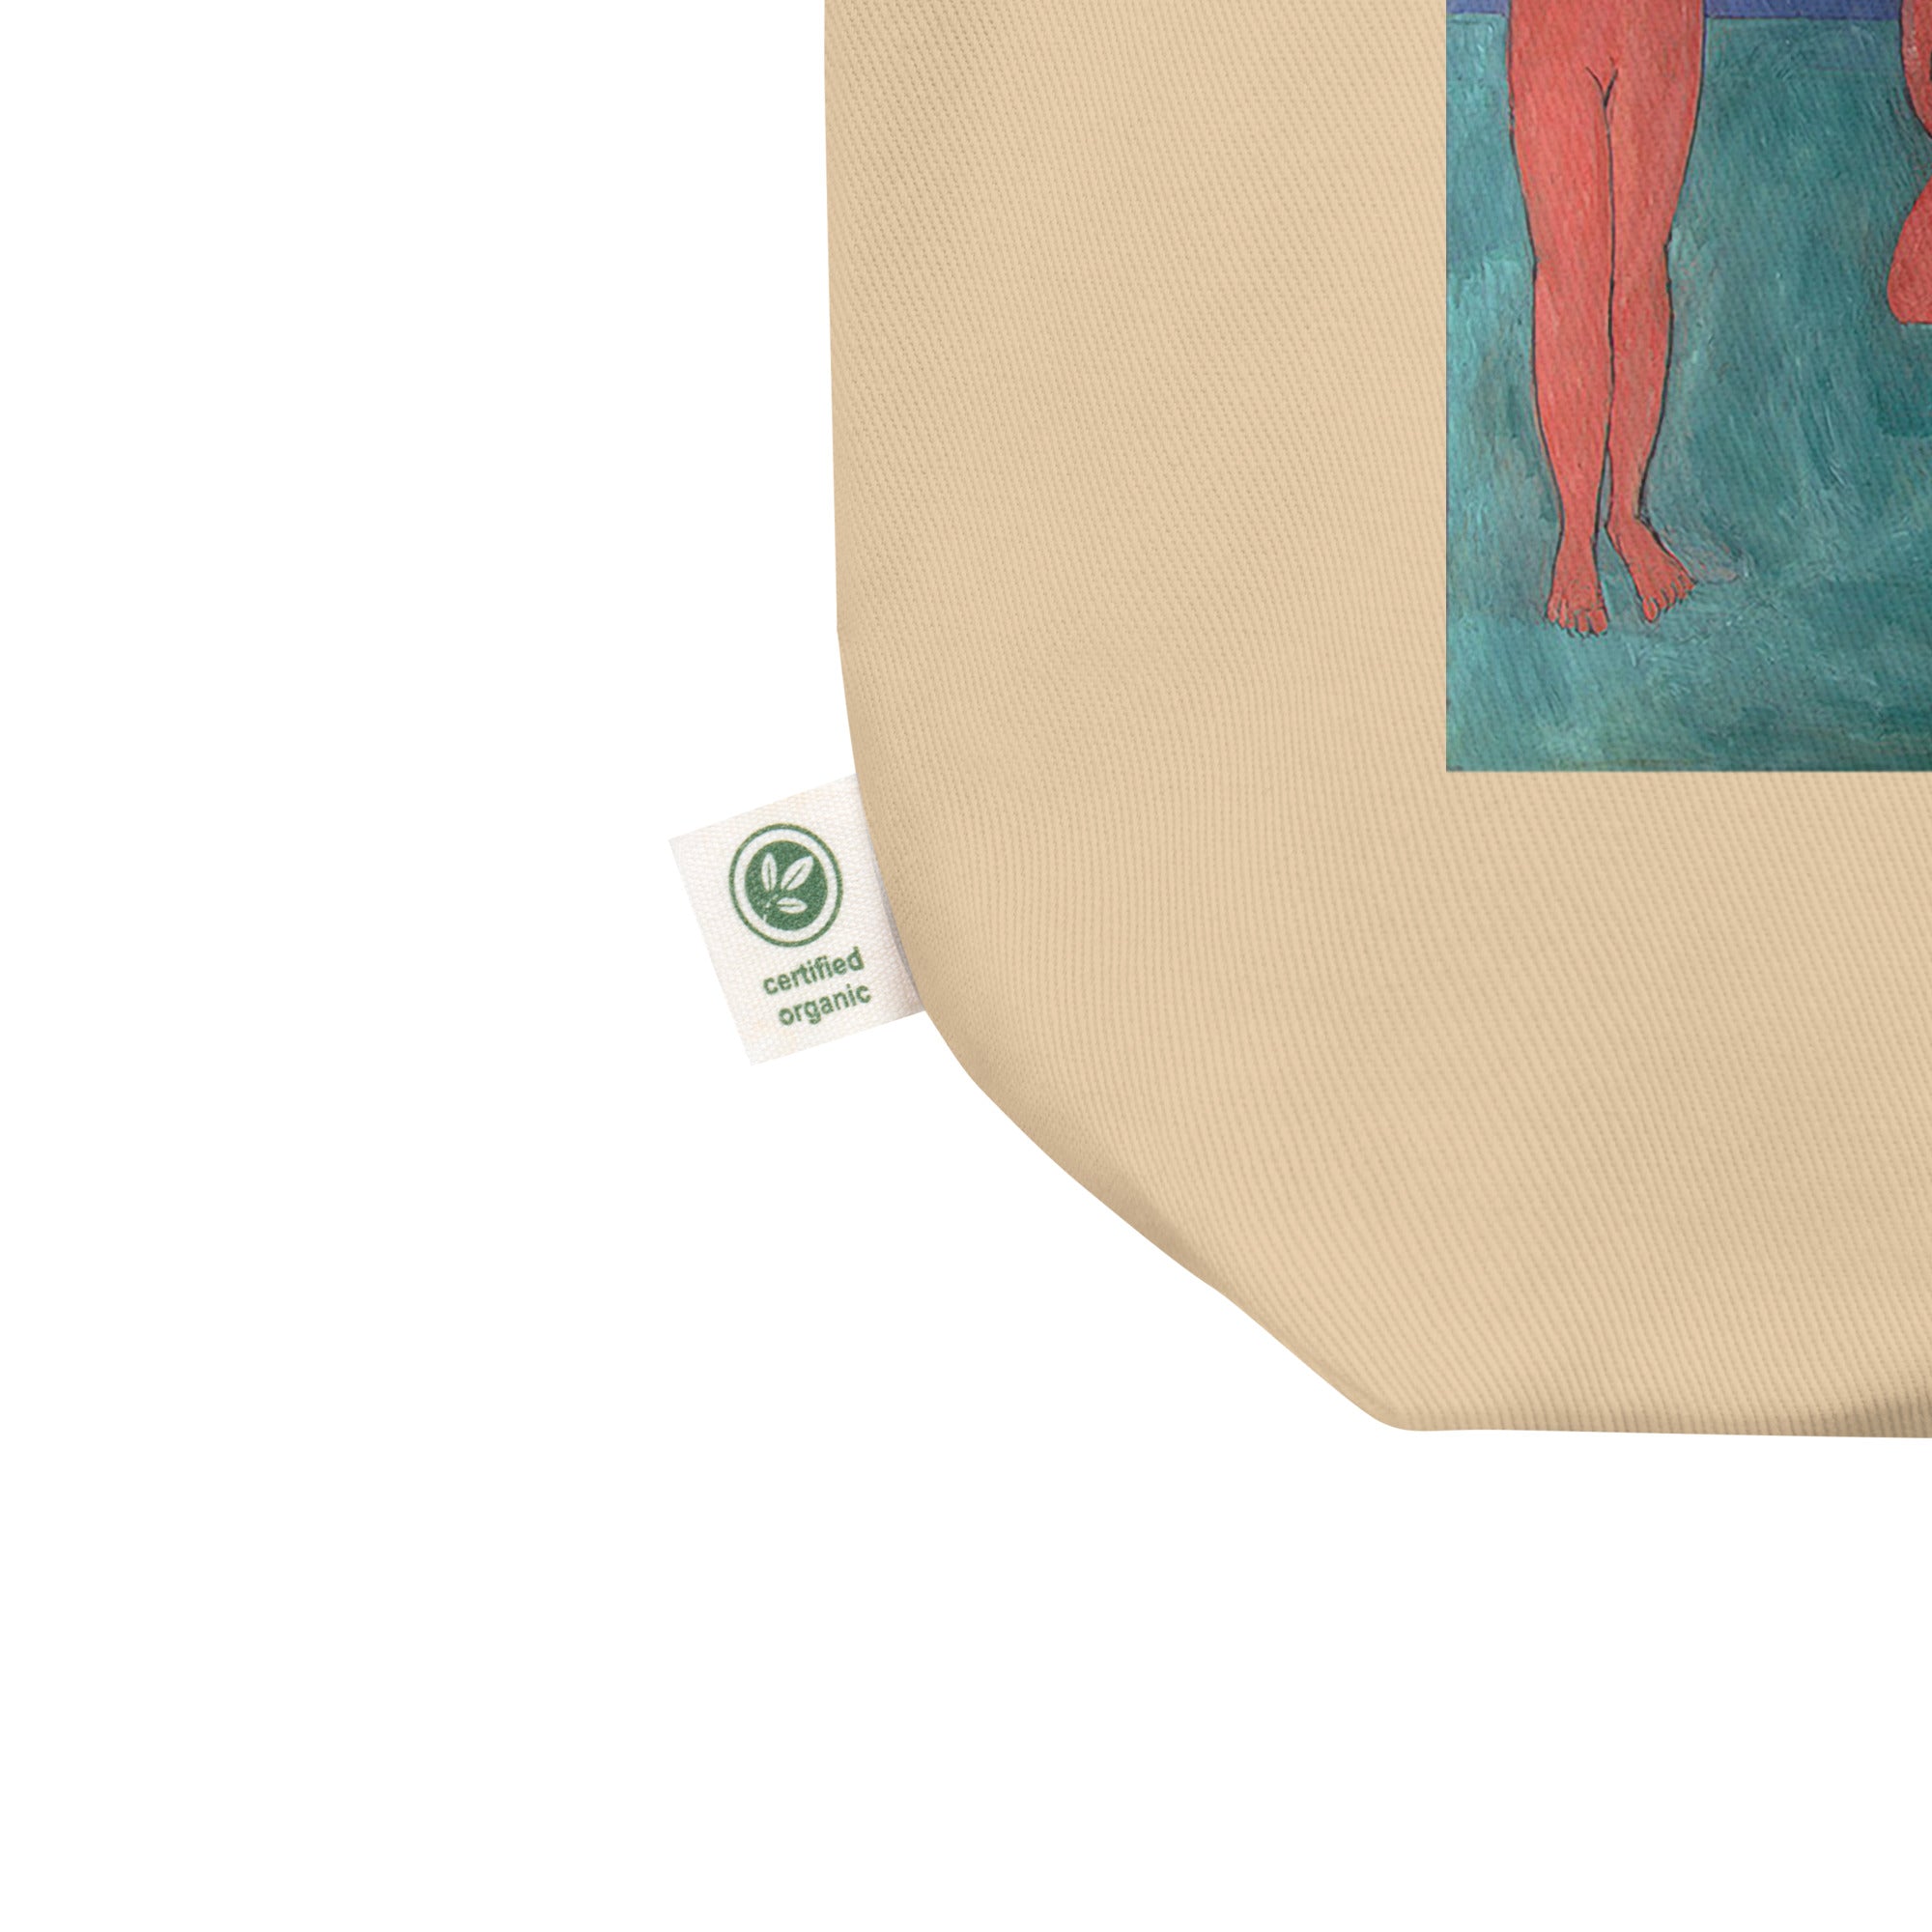 Henri Matisse 'Music' Famous Painting Totebag | Eco Friendly Art Tote Bag